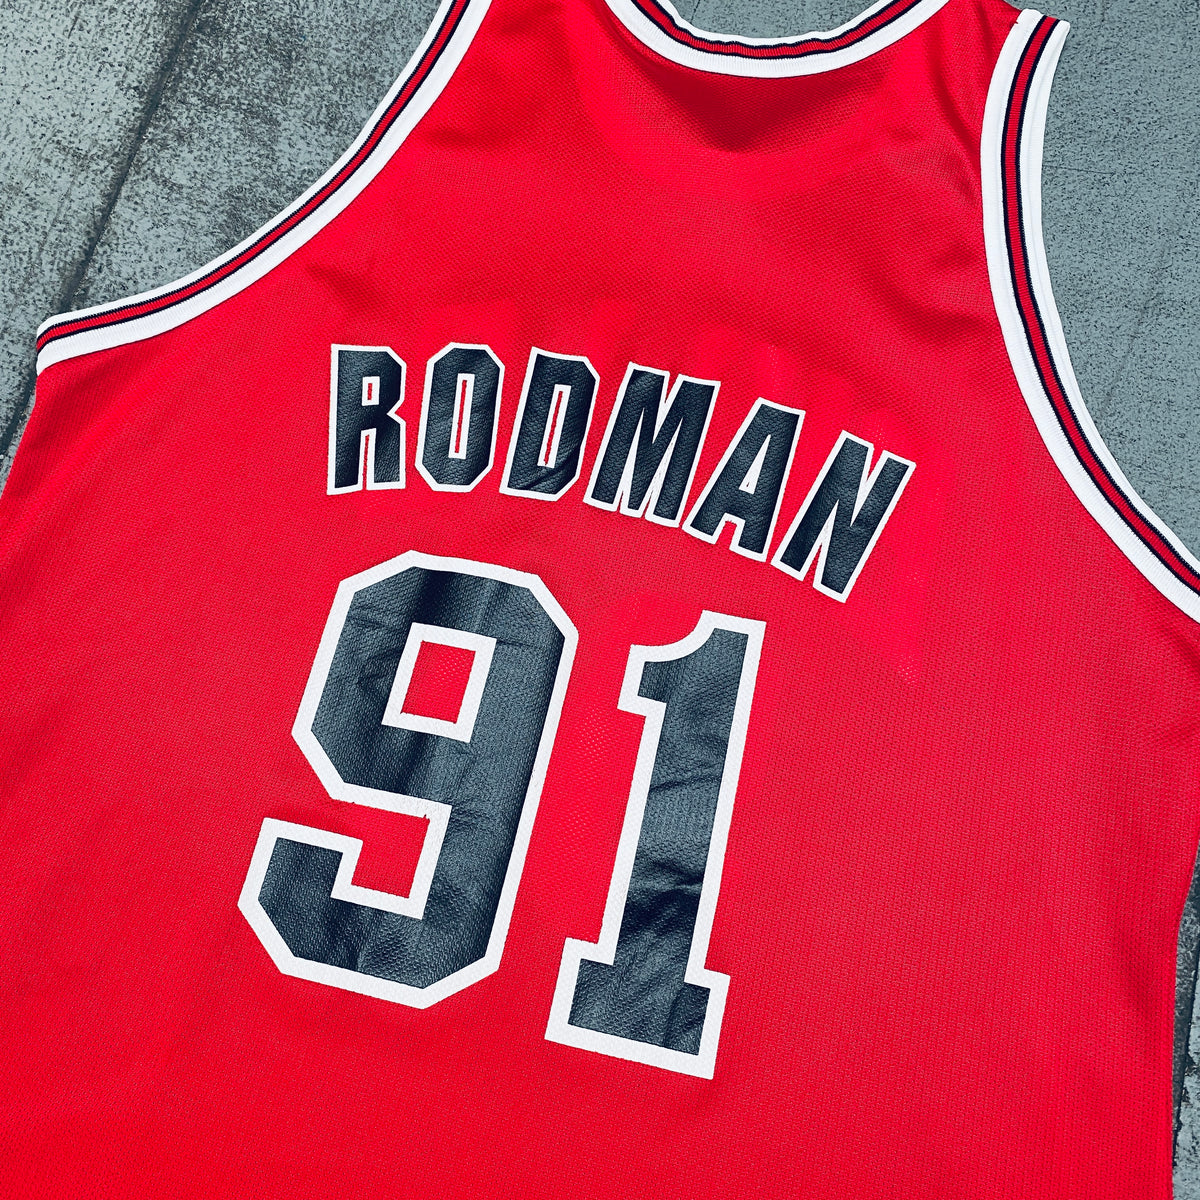 🏀 Get the Dennis Rodman '95 Retro Jersey Black I KICKZ